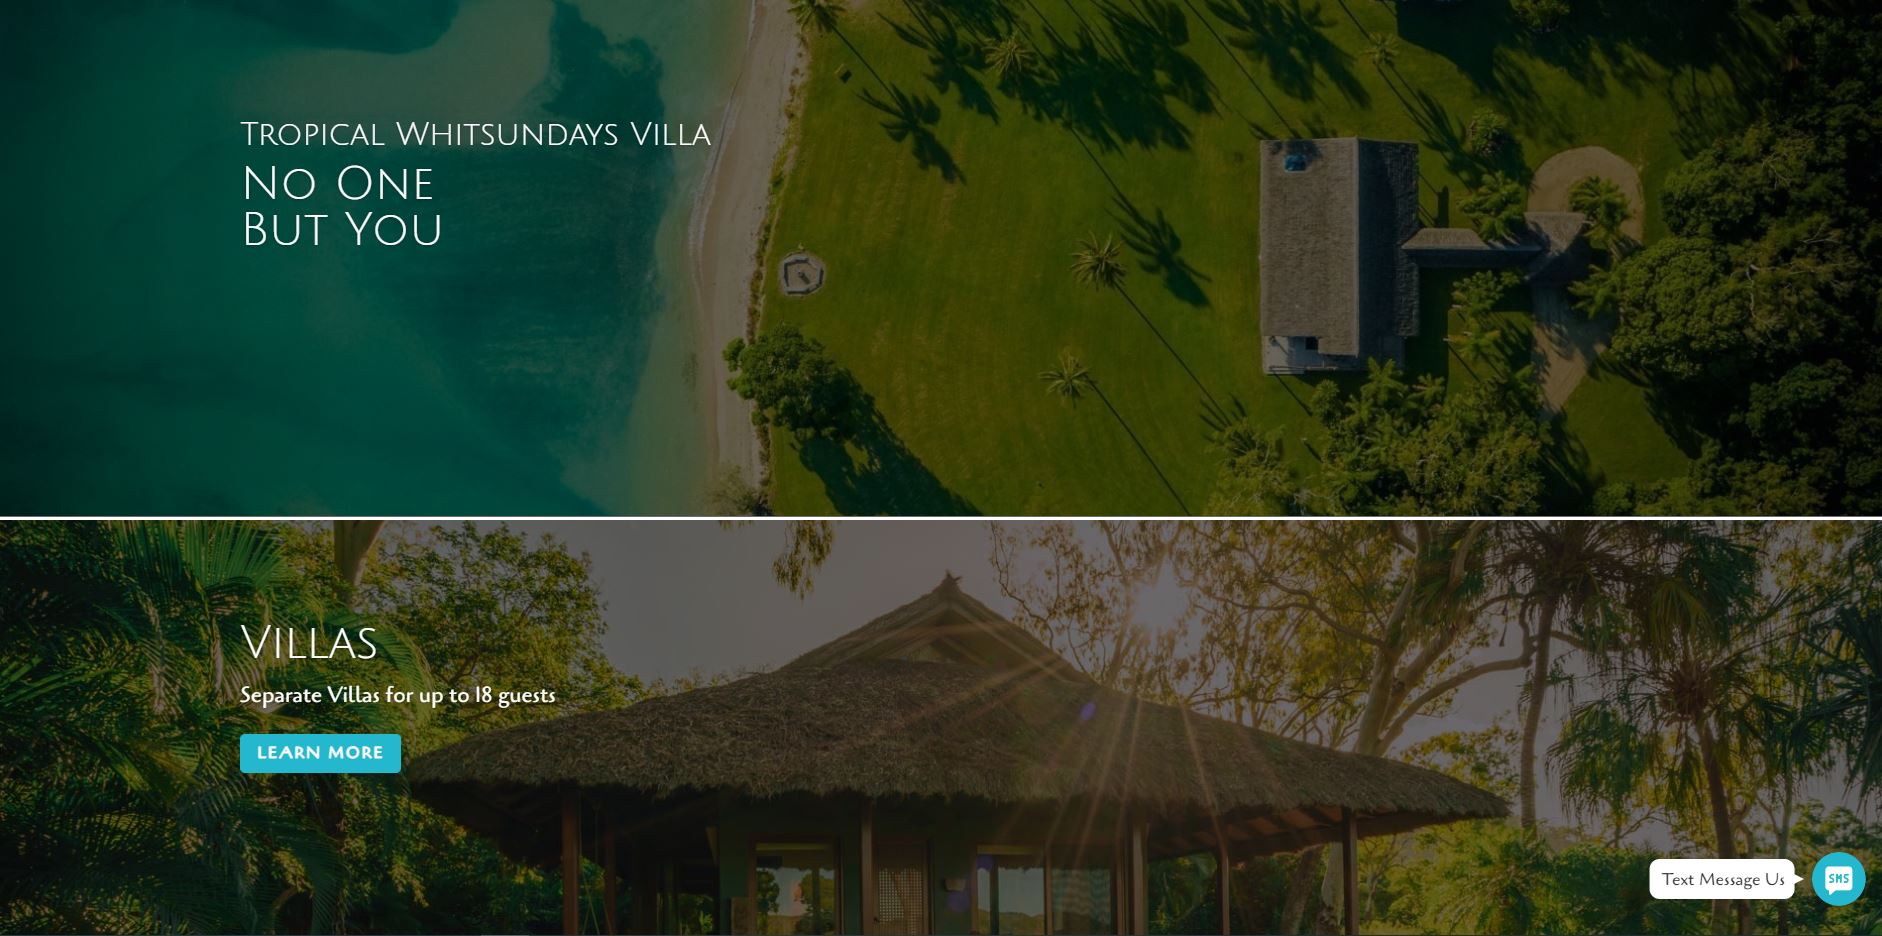 villa paradise cove website design